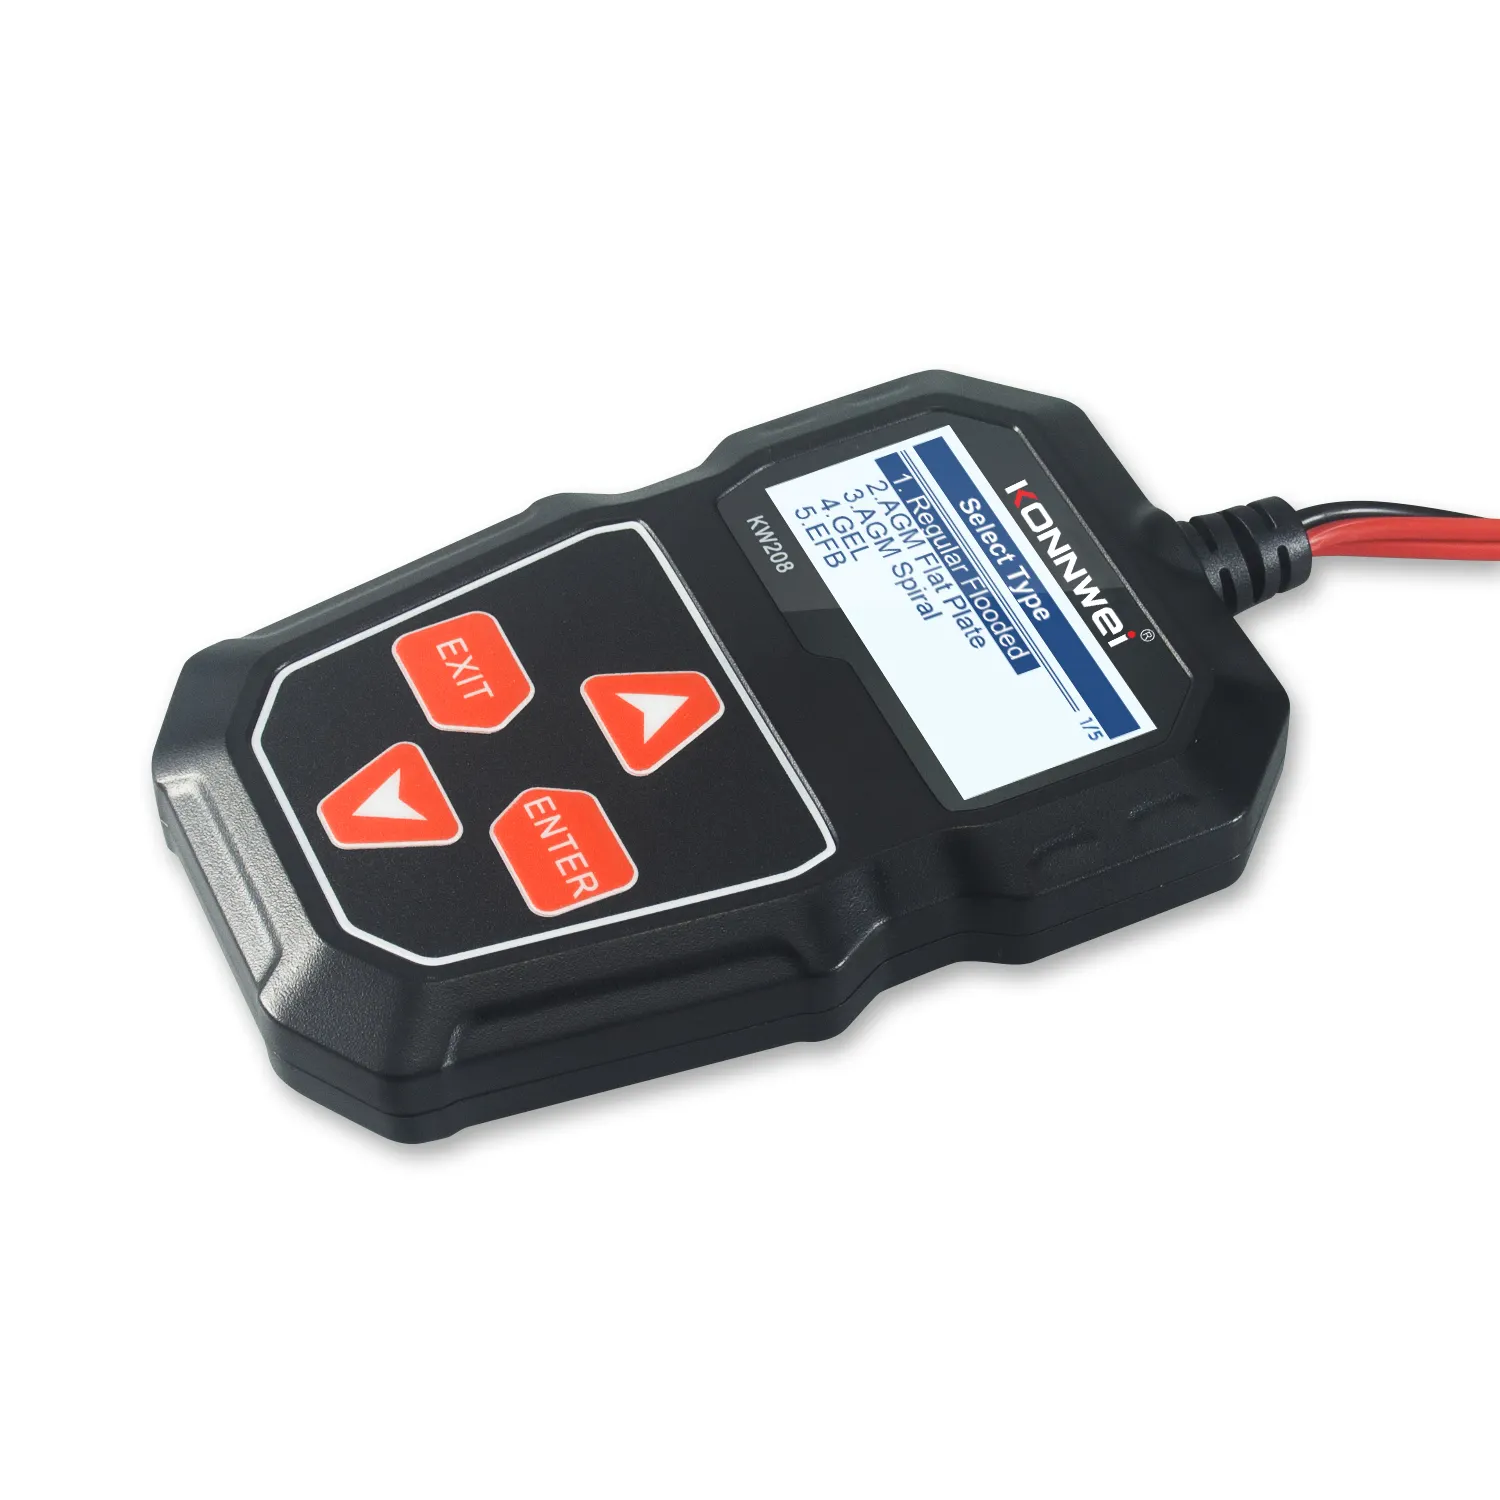 Alat diagnostik baterai penguji 12v, alat pengukur diagnostik mobil berlaku untuk semua 12V baterai mobil